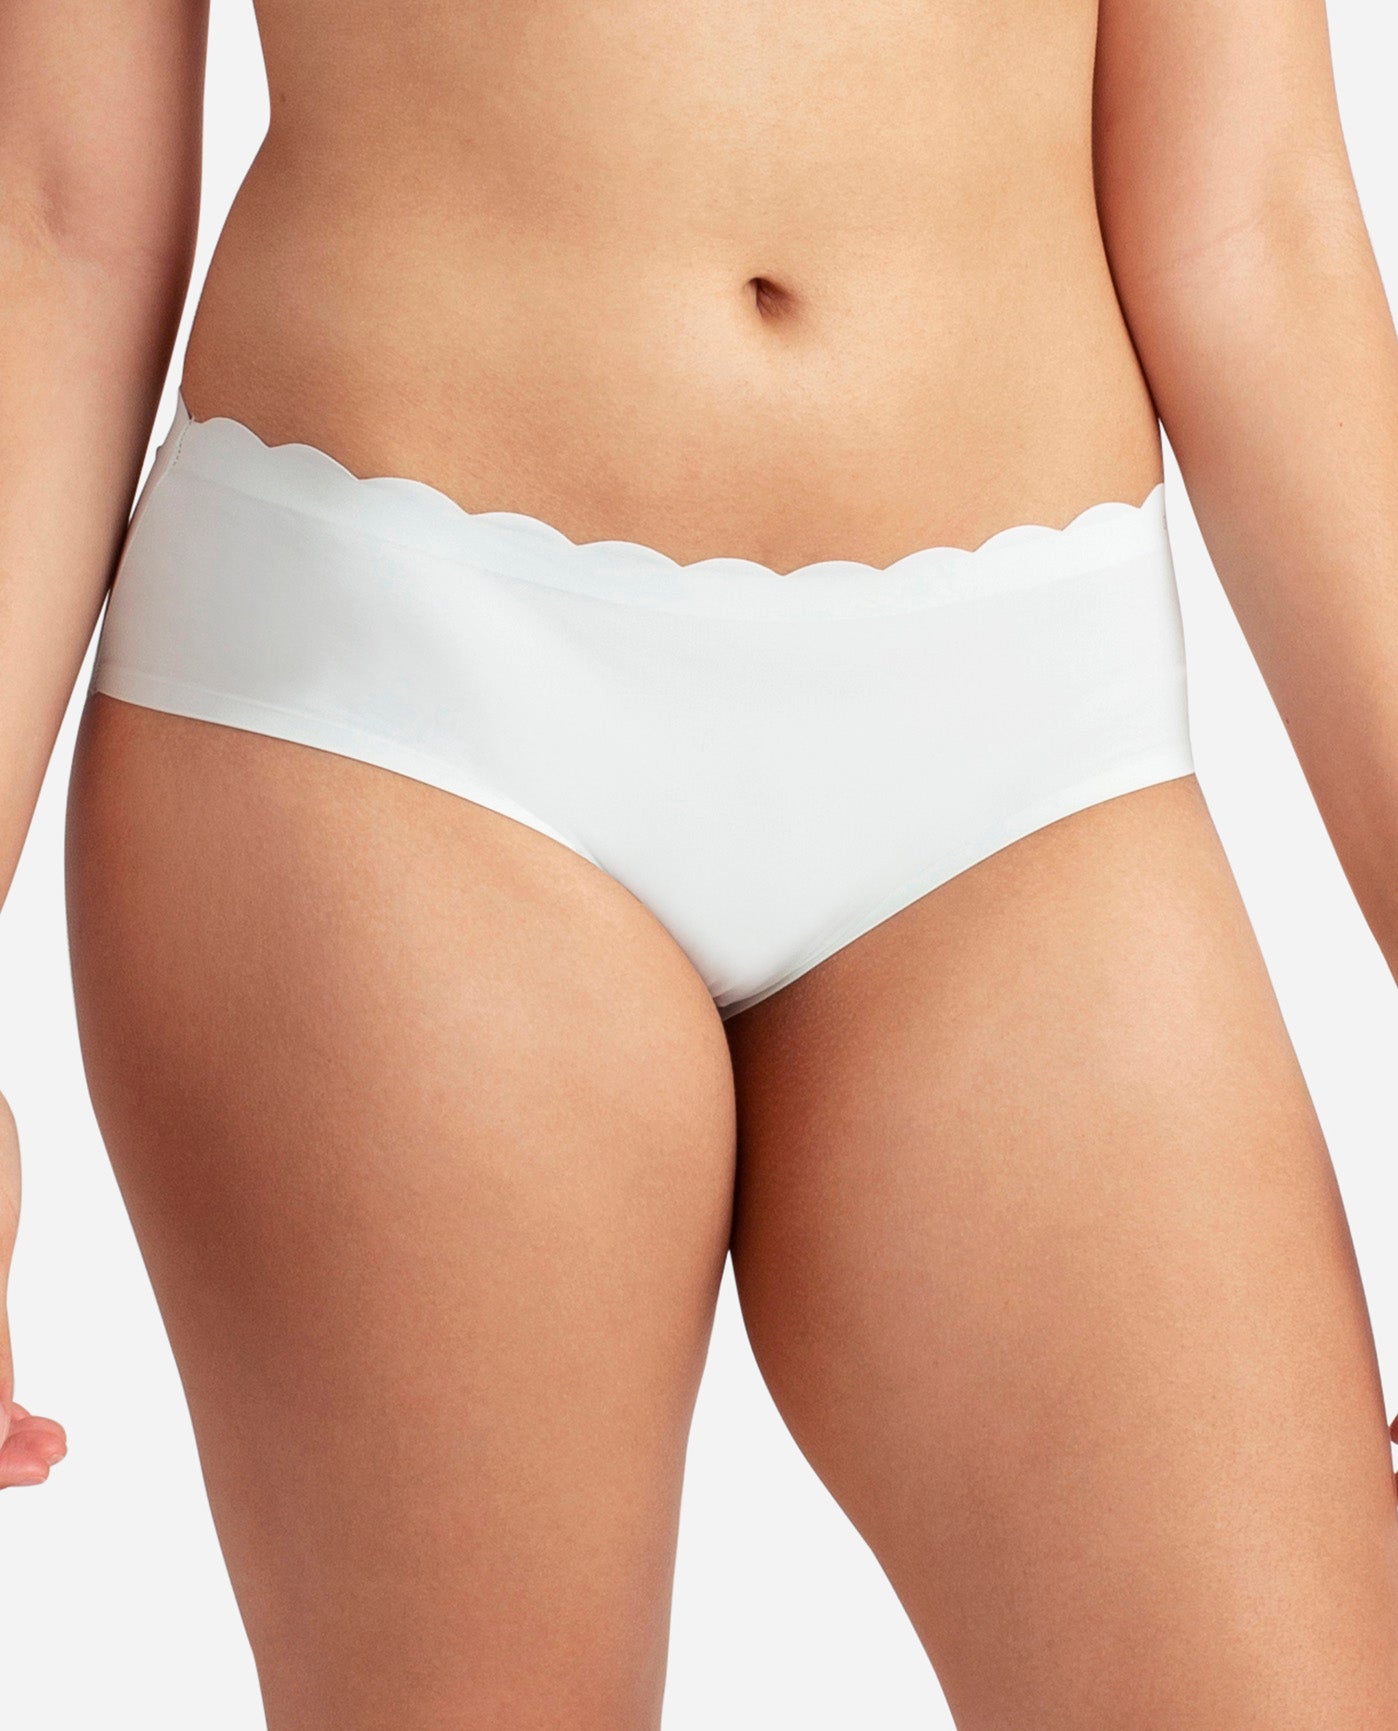 Underwear Womens Danskin 5pk. Laser Hipster Panties - DS9009-5PKAL